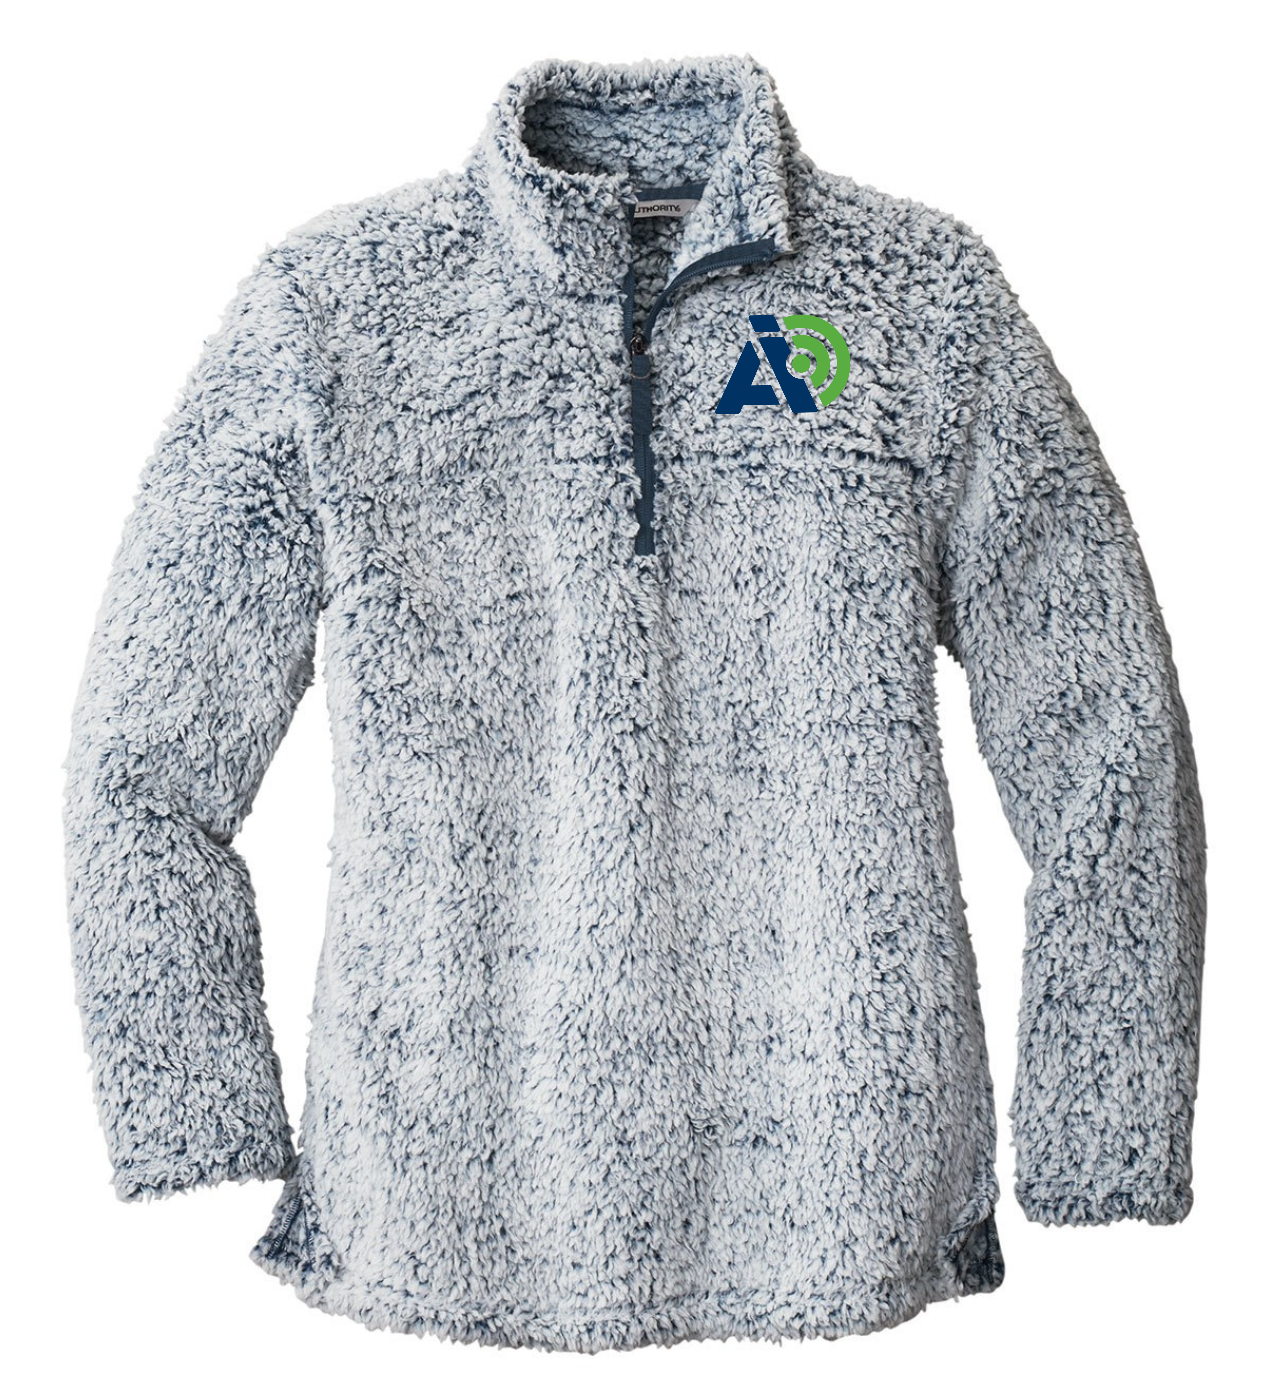 AIO Performance Quarter-Zip Fleece Pullover